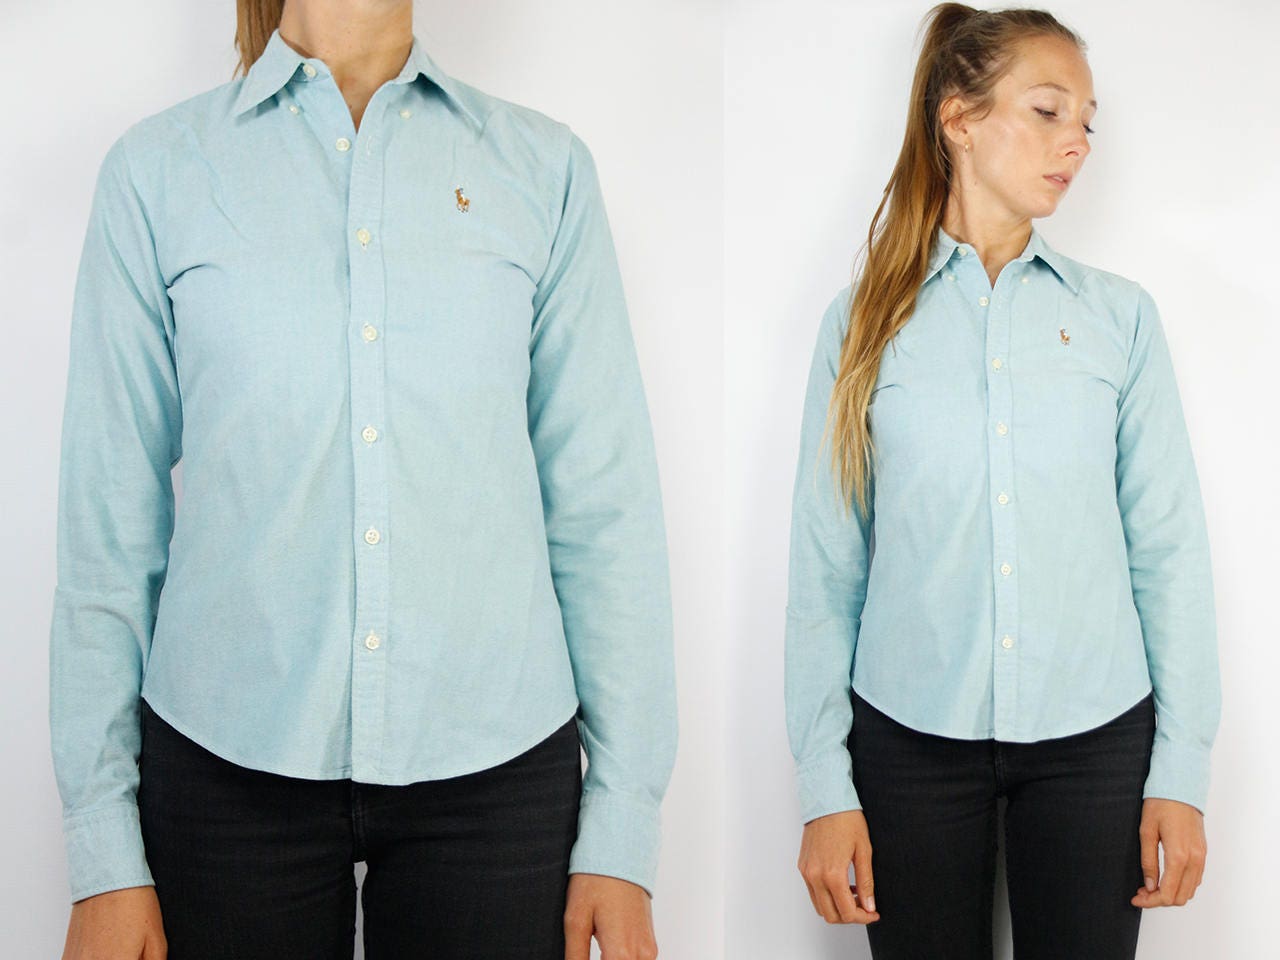 women's polo button up shirts